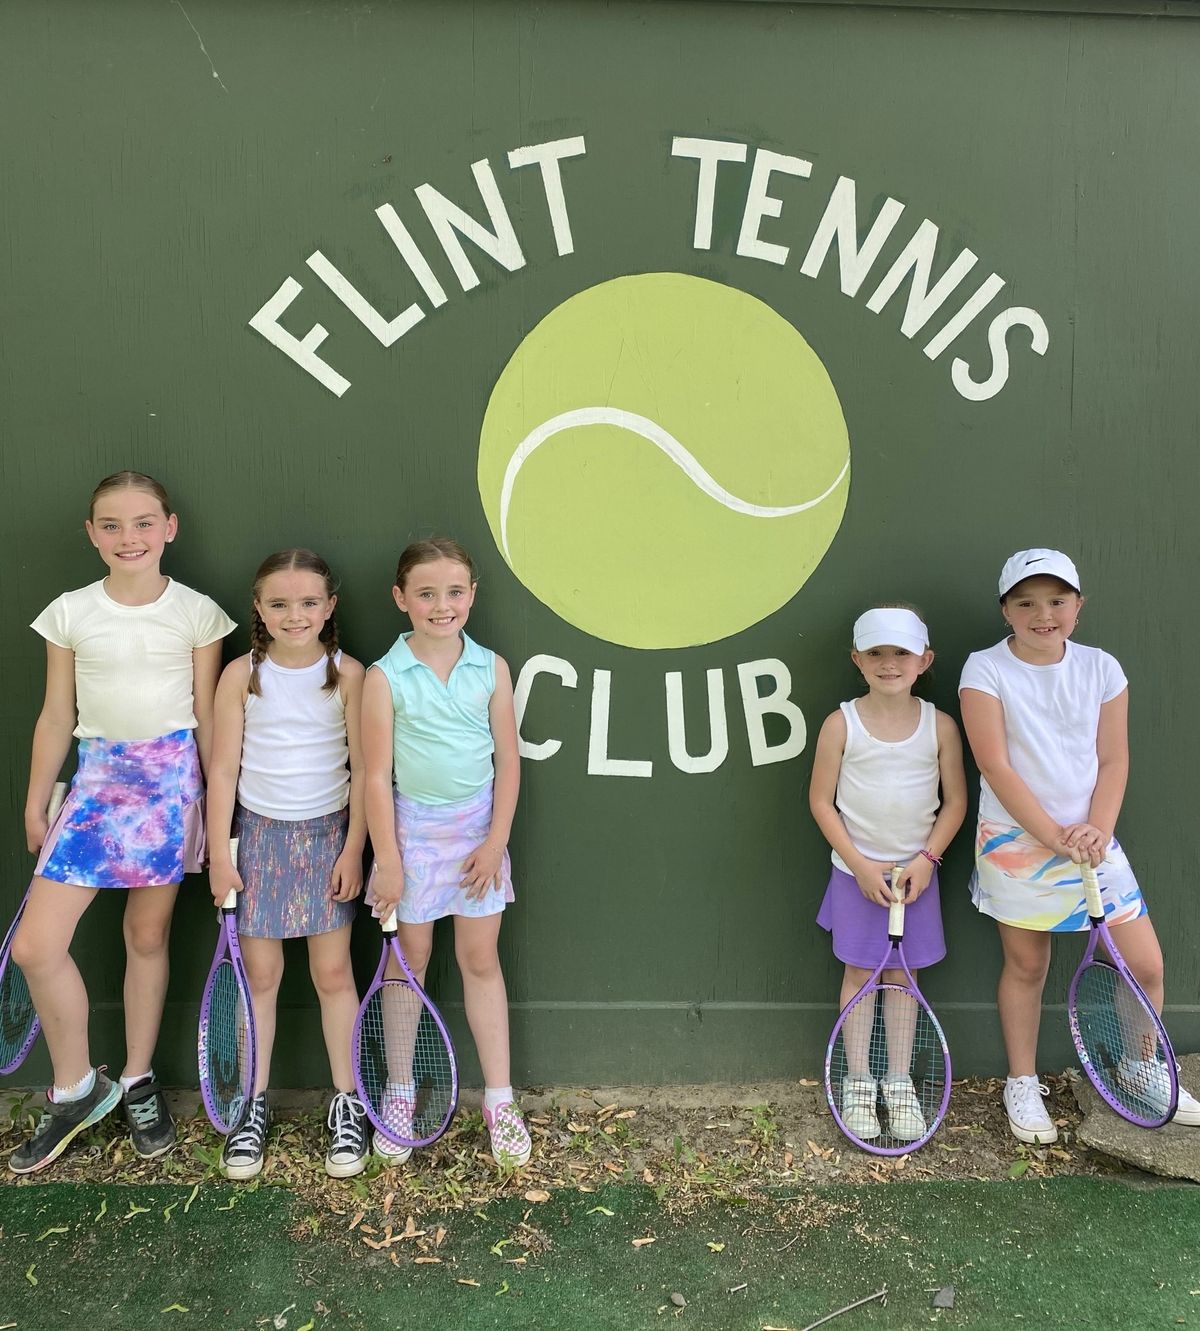 Greater Flint Olympian Games Tennis Tournament